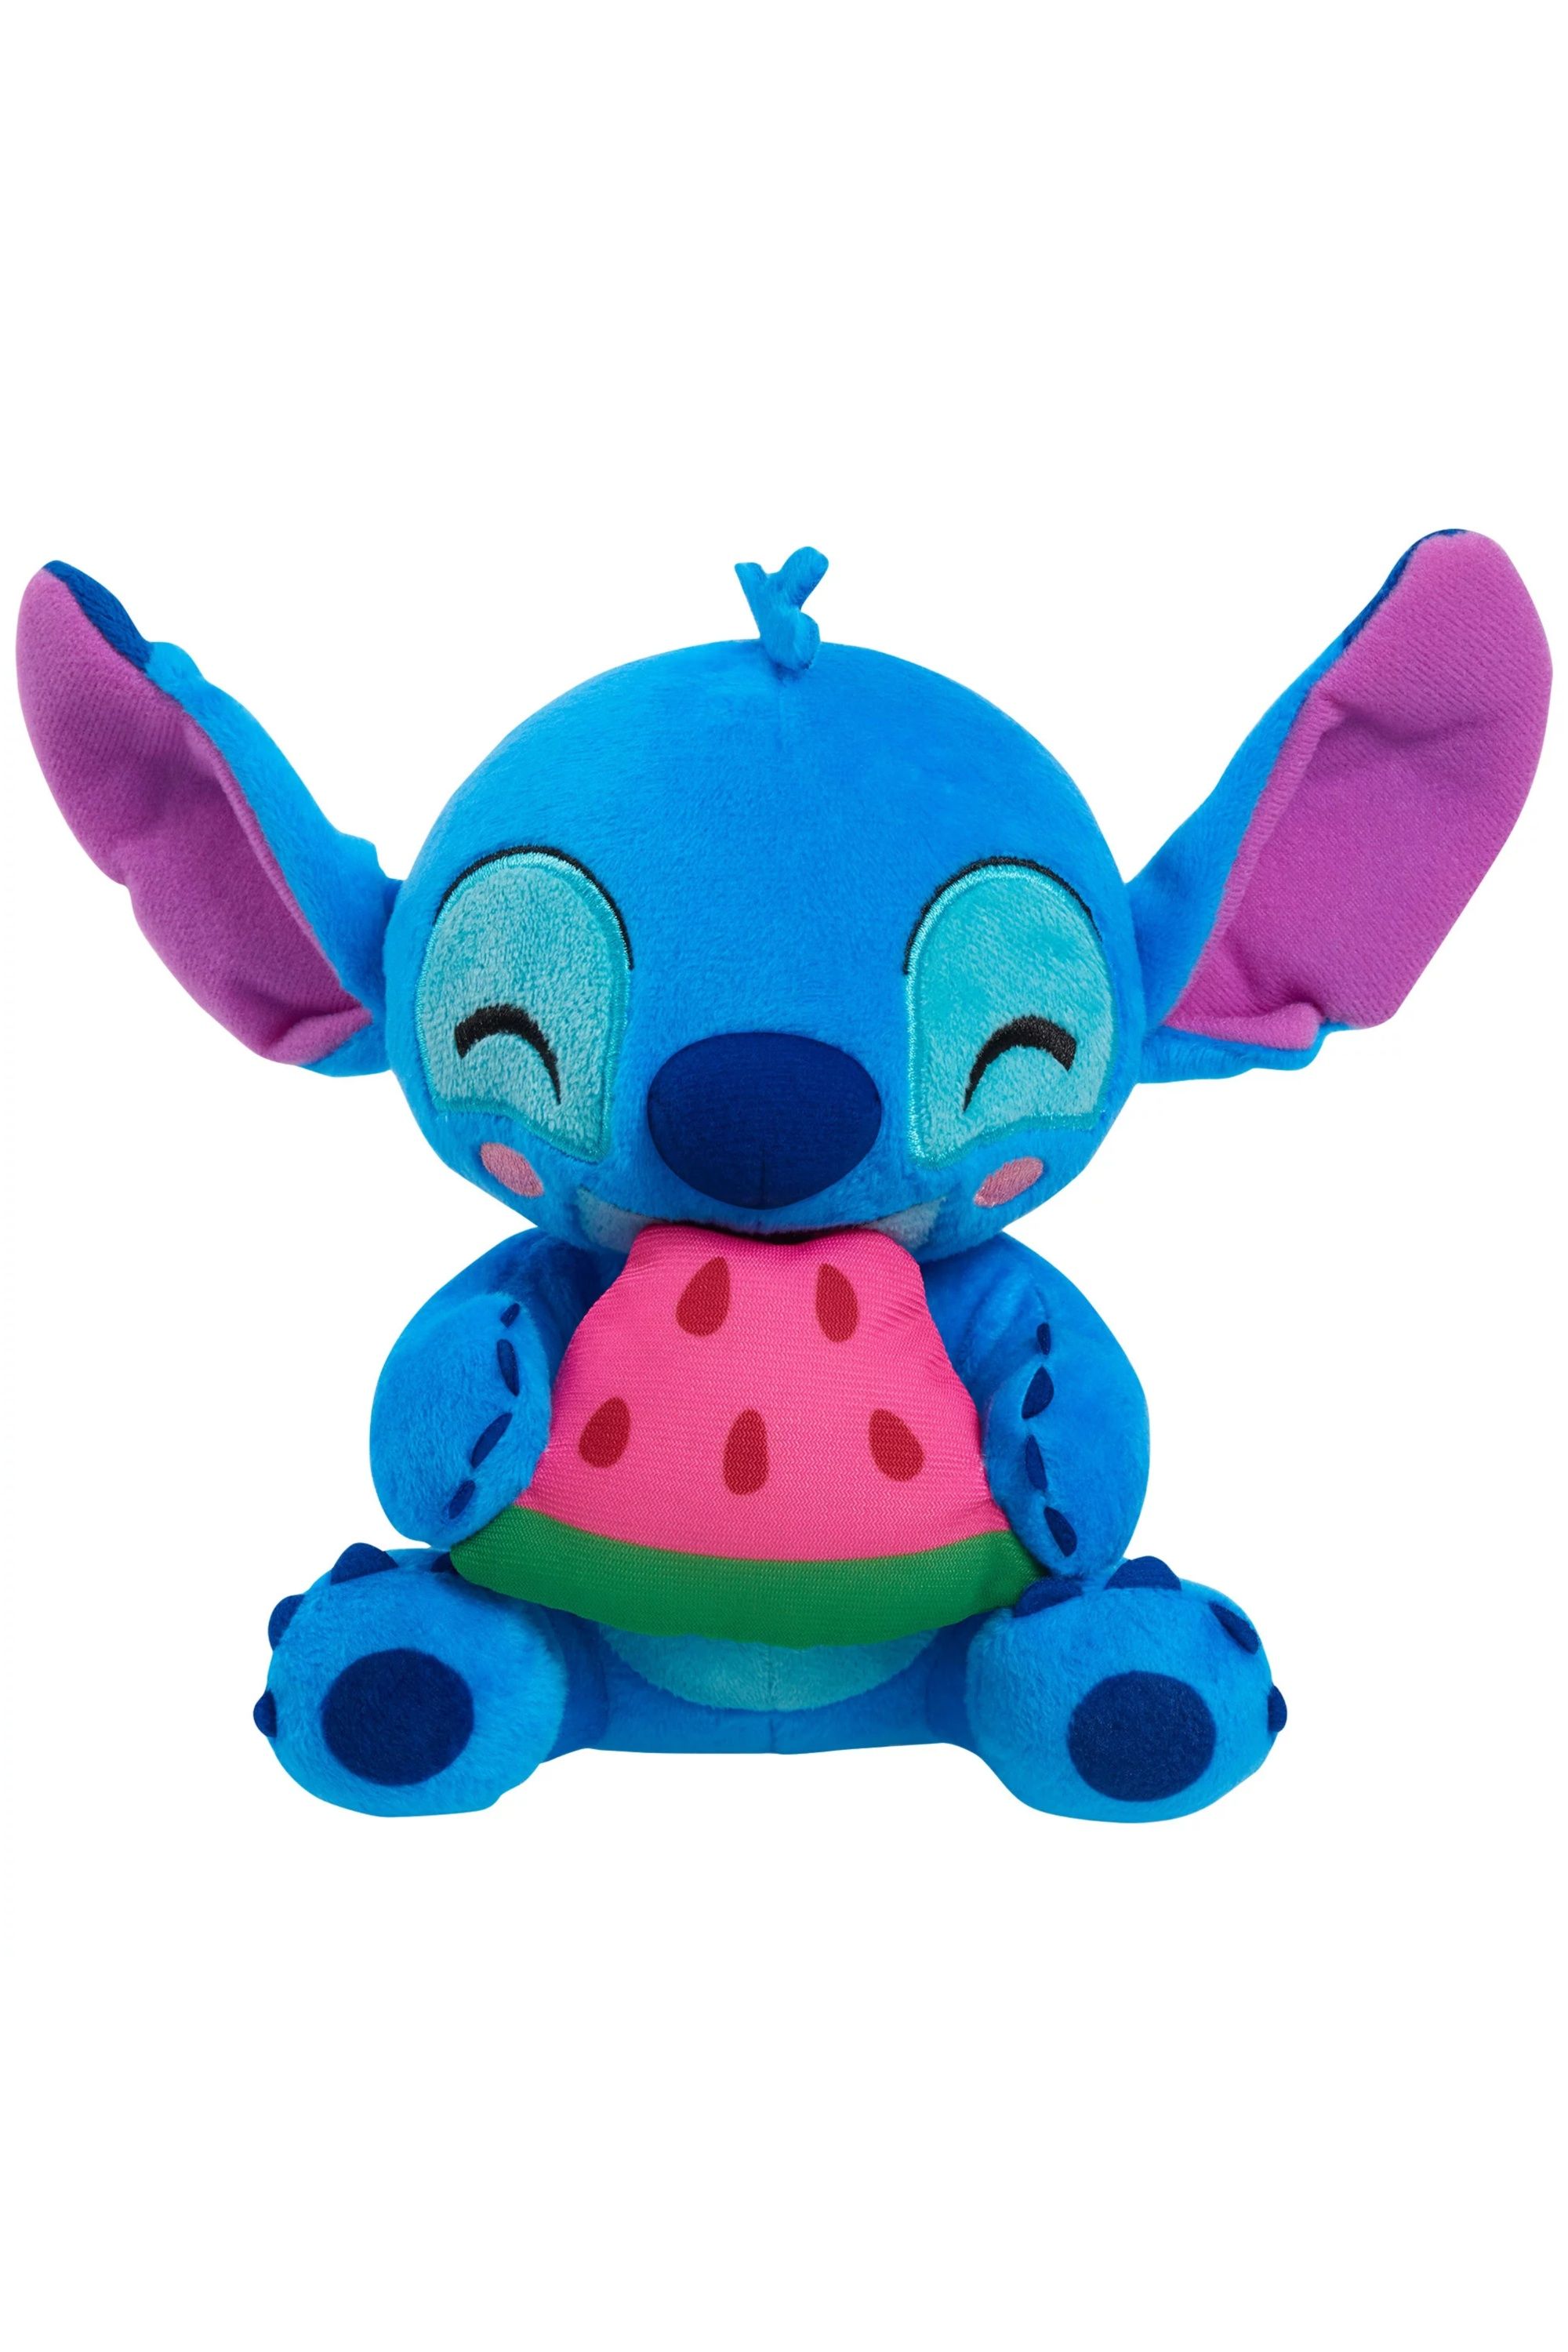 Little Disney Stitch plush with watermelon